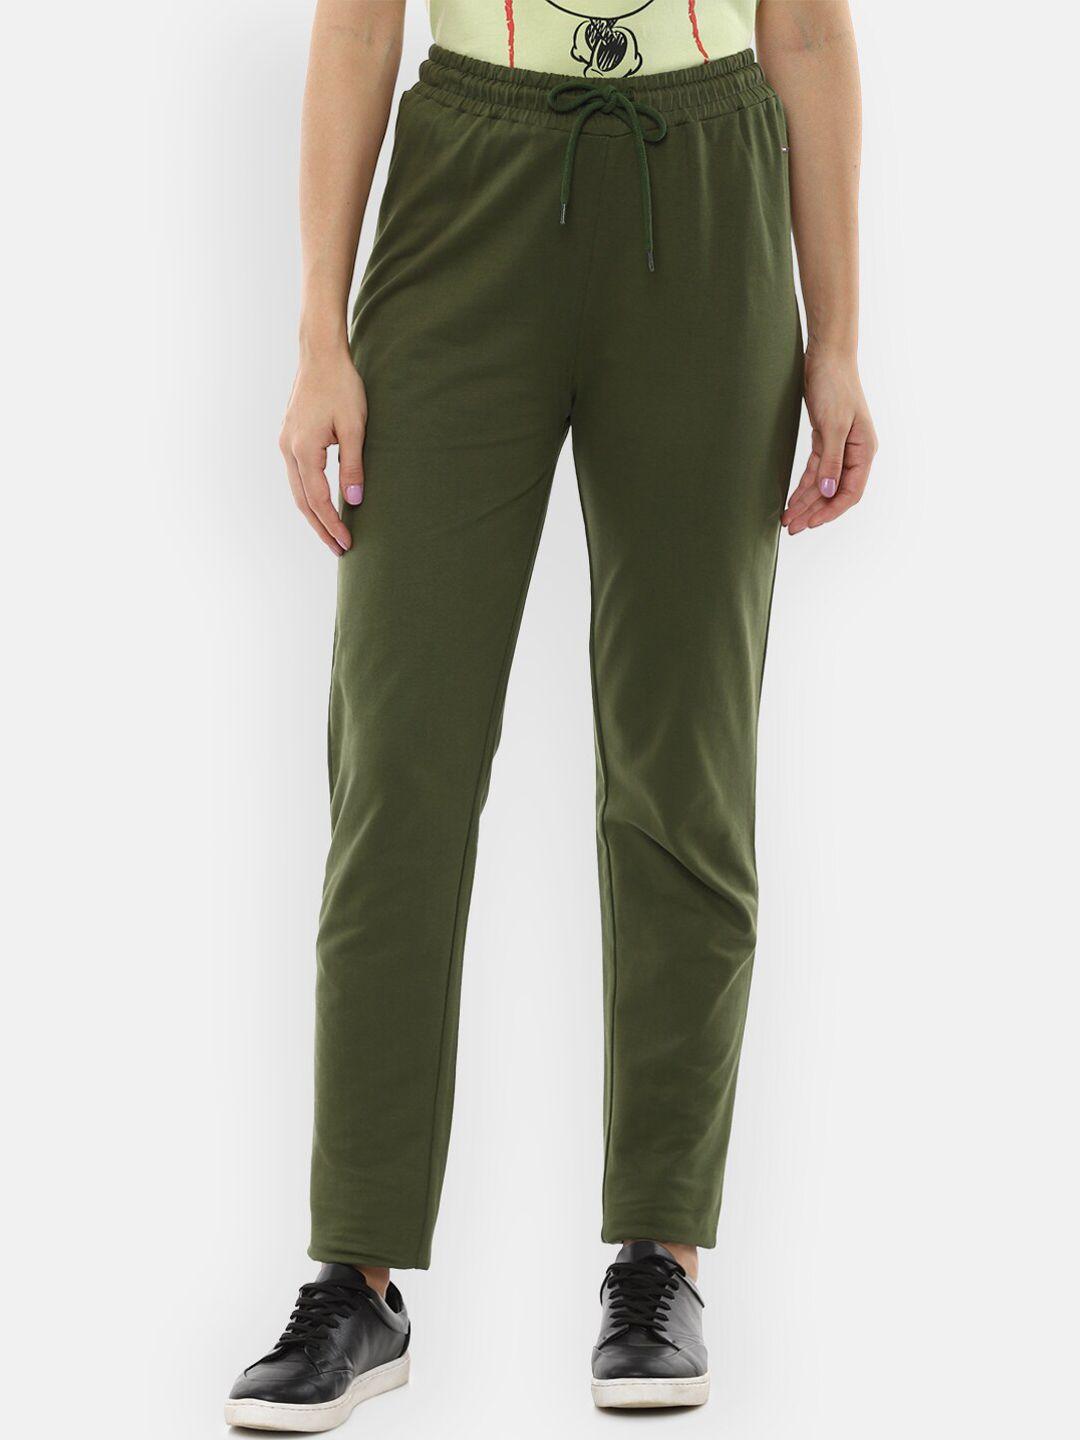 van-heusen-woman-olive-green-solid-cotton-track-pants